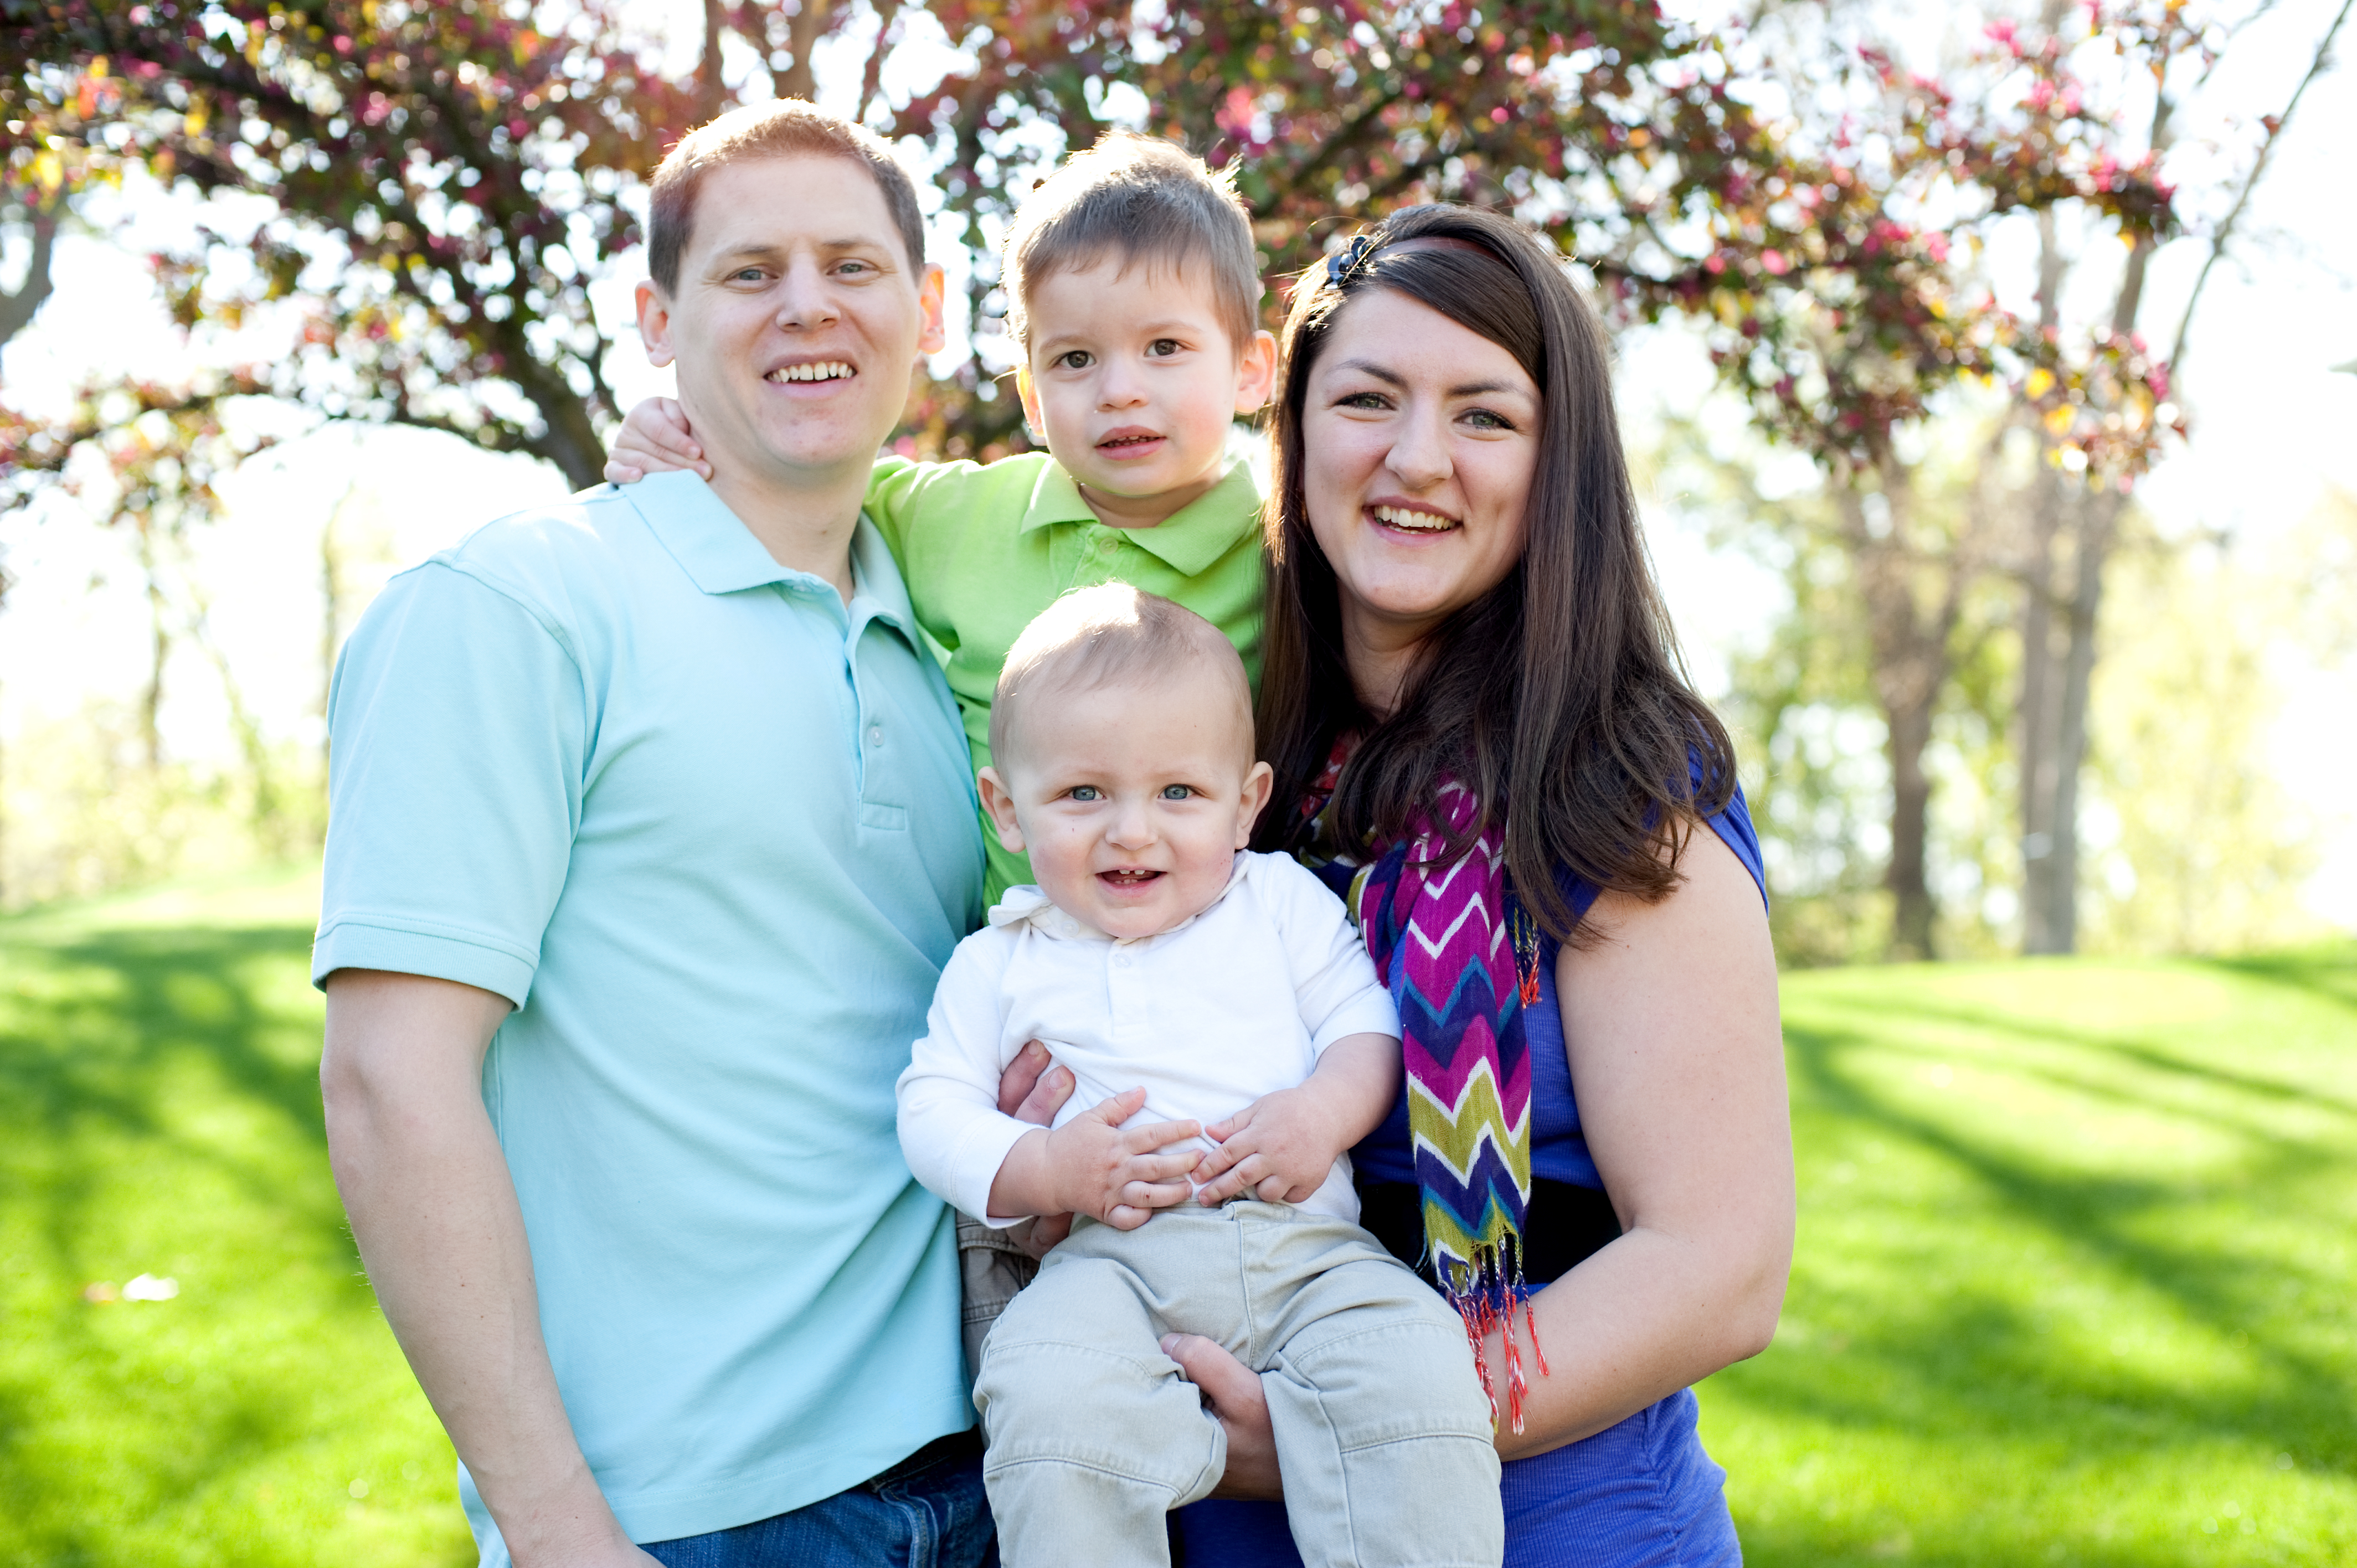 adoptive family built through open adoption pose for a photo under a tree